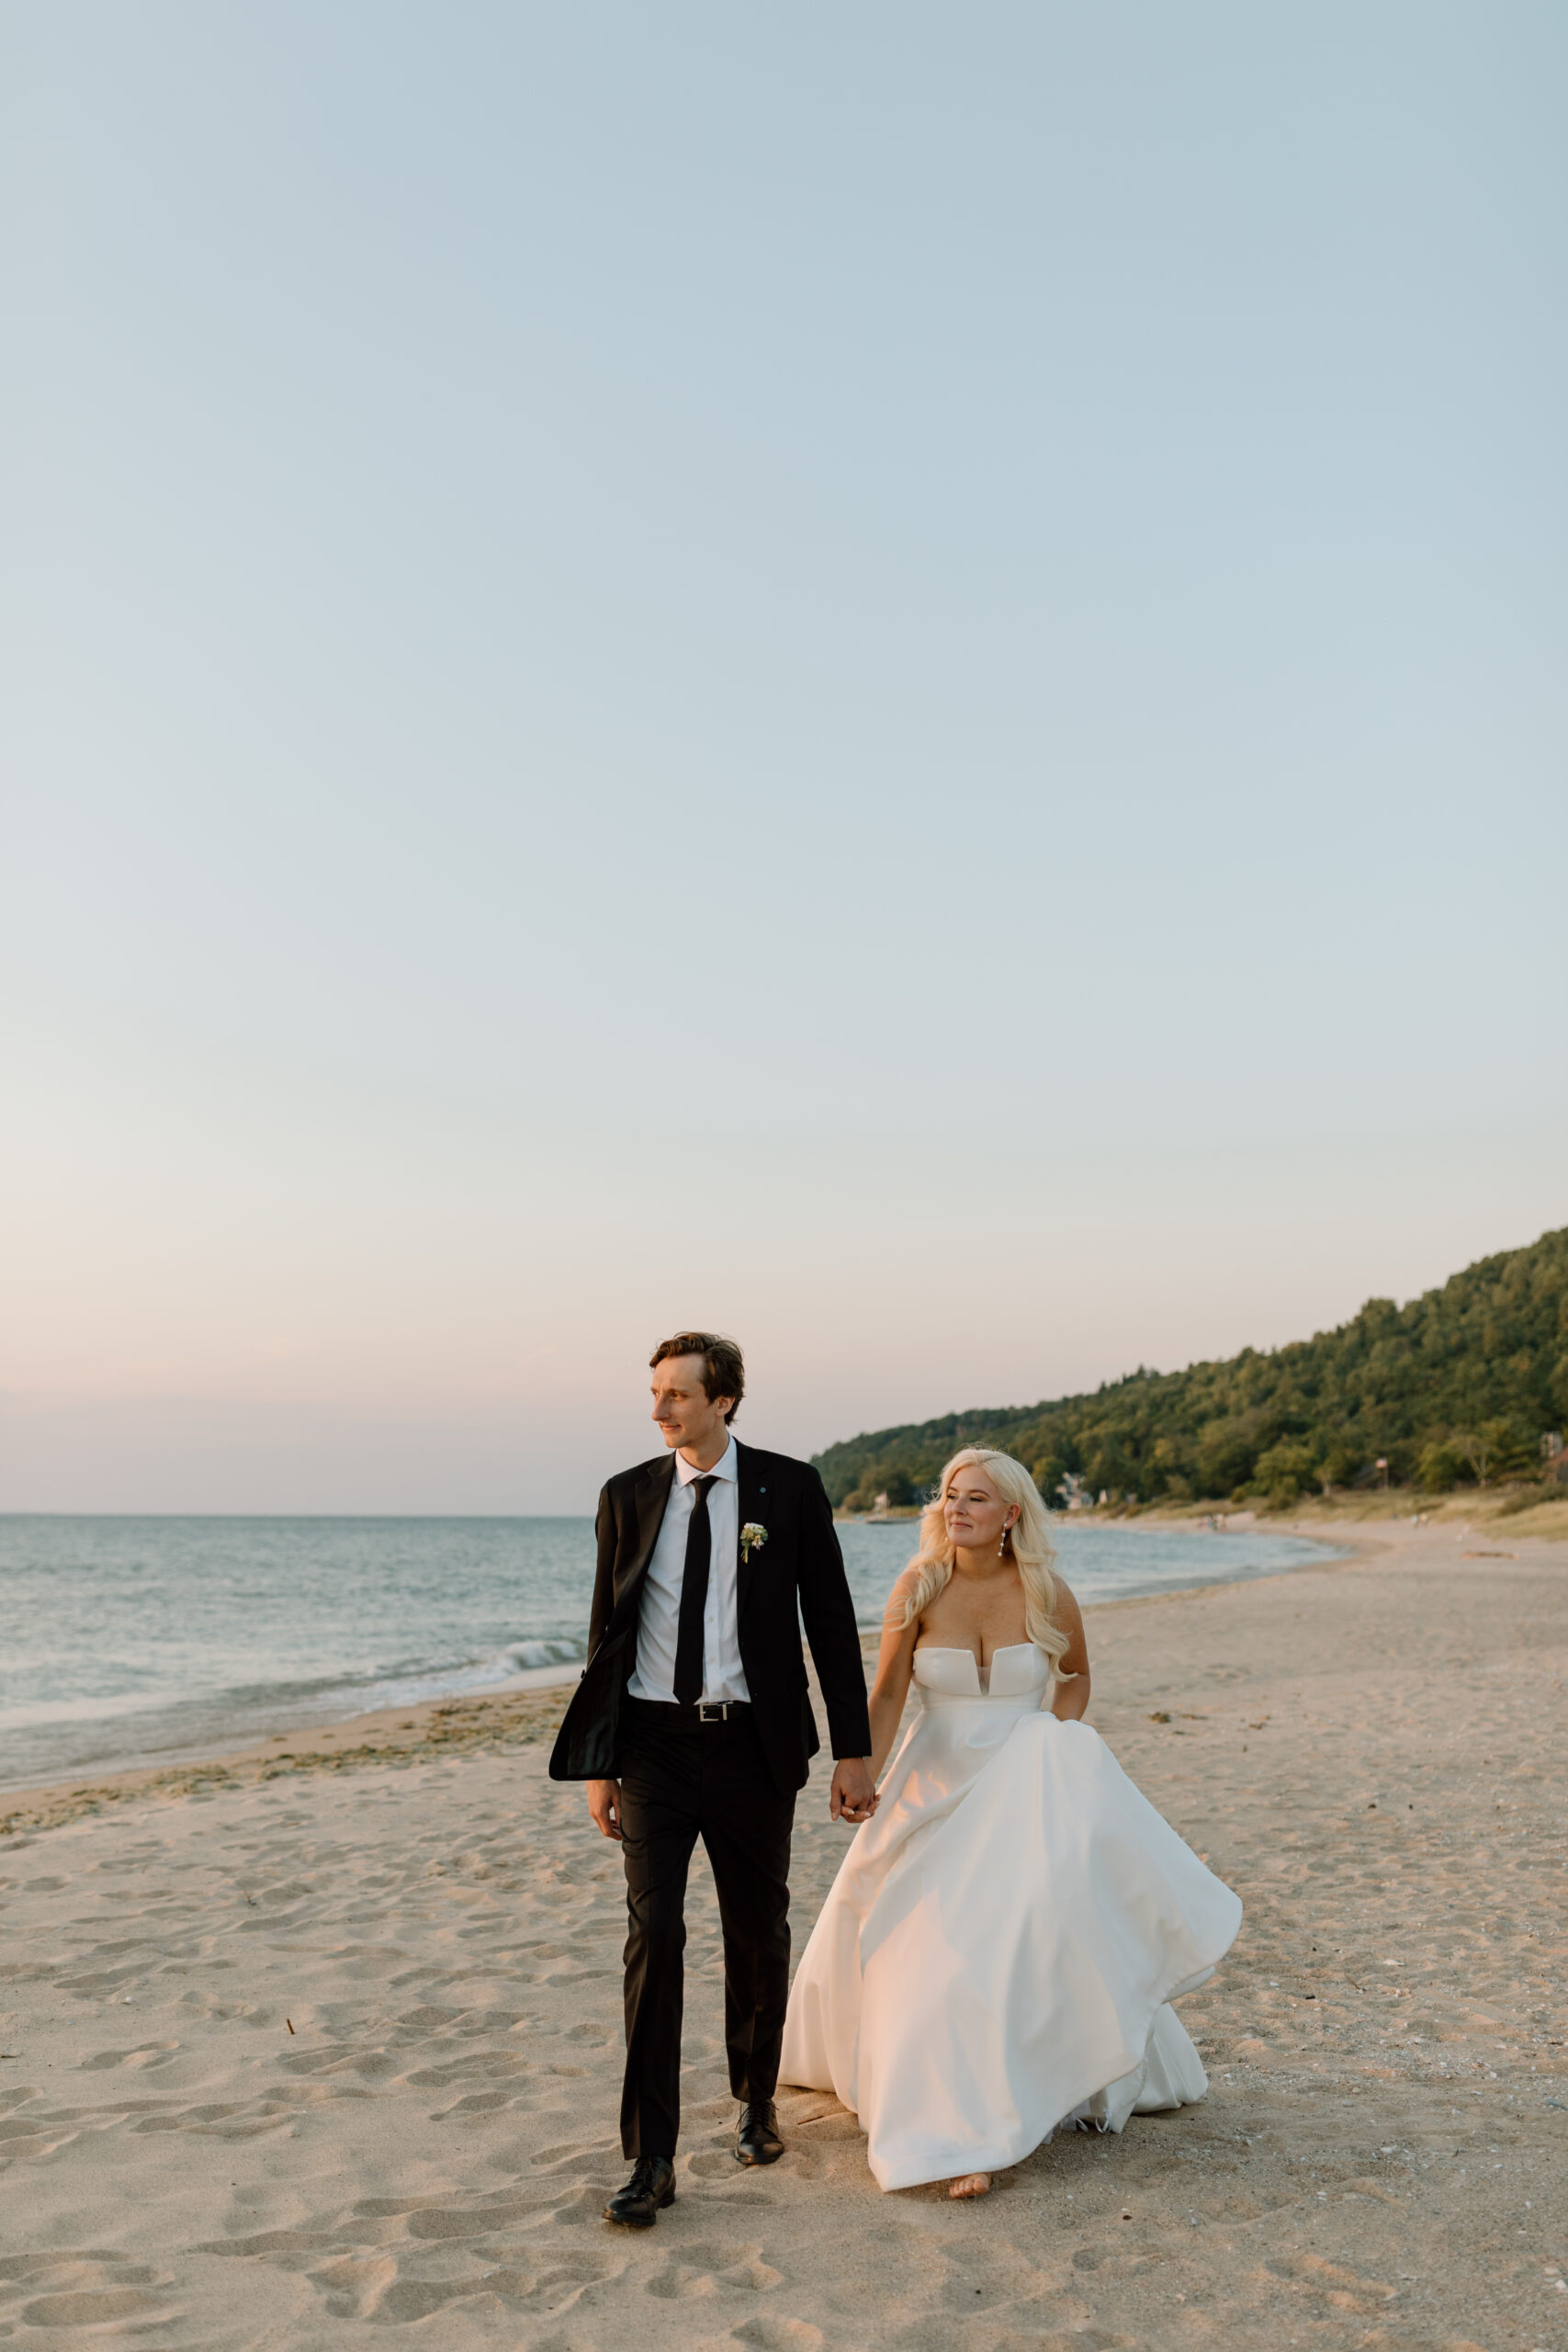 Traverse City Michigan sunset beach wedding photos